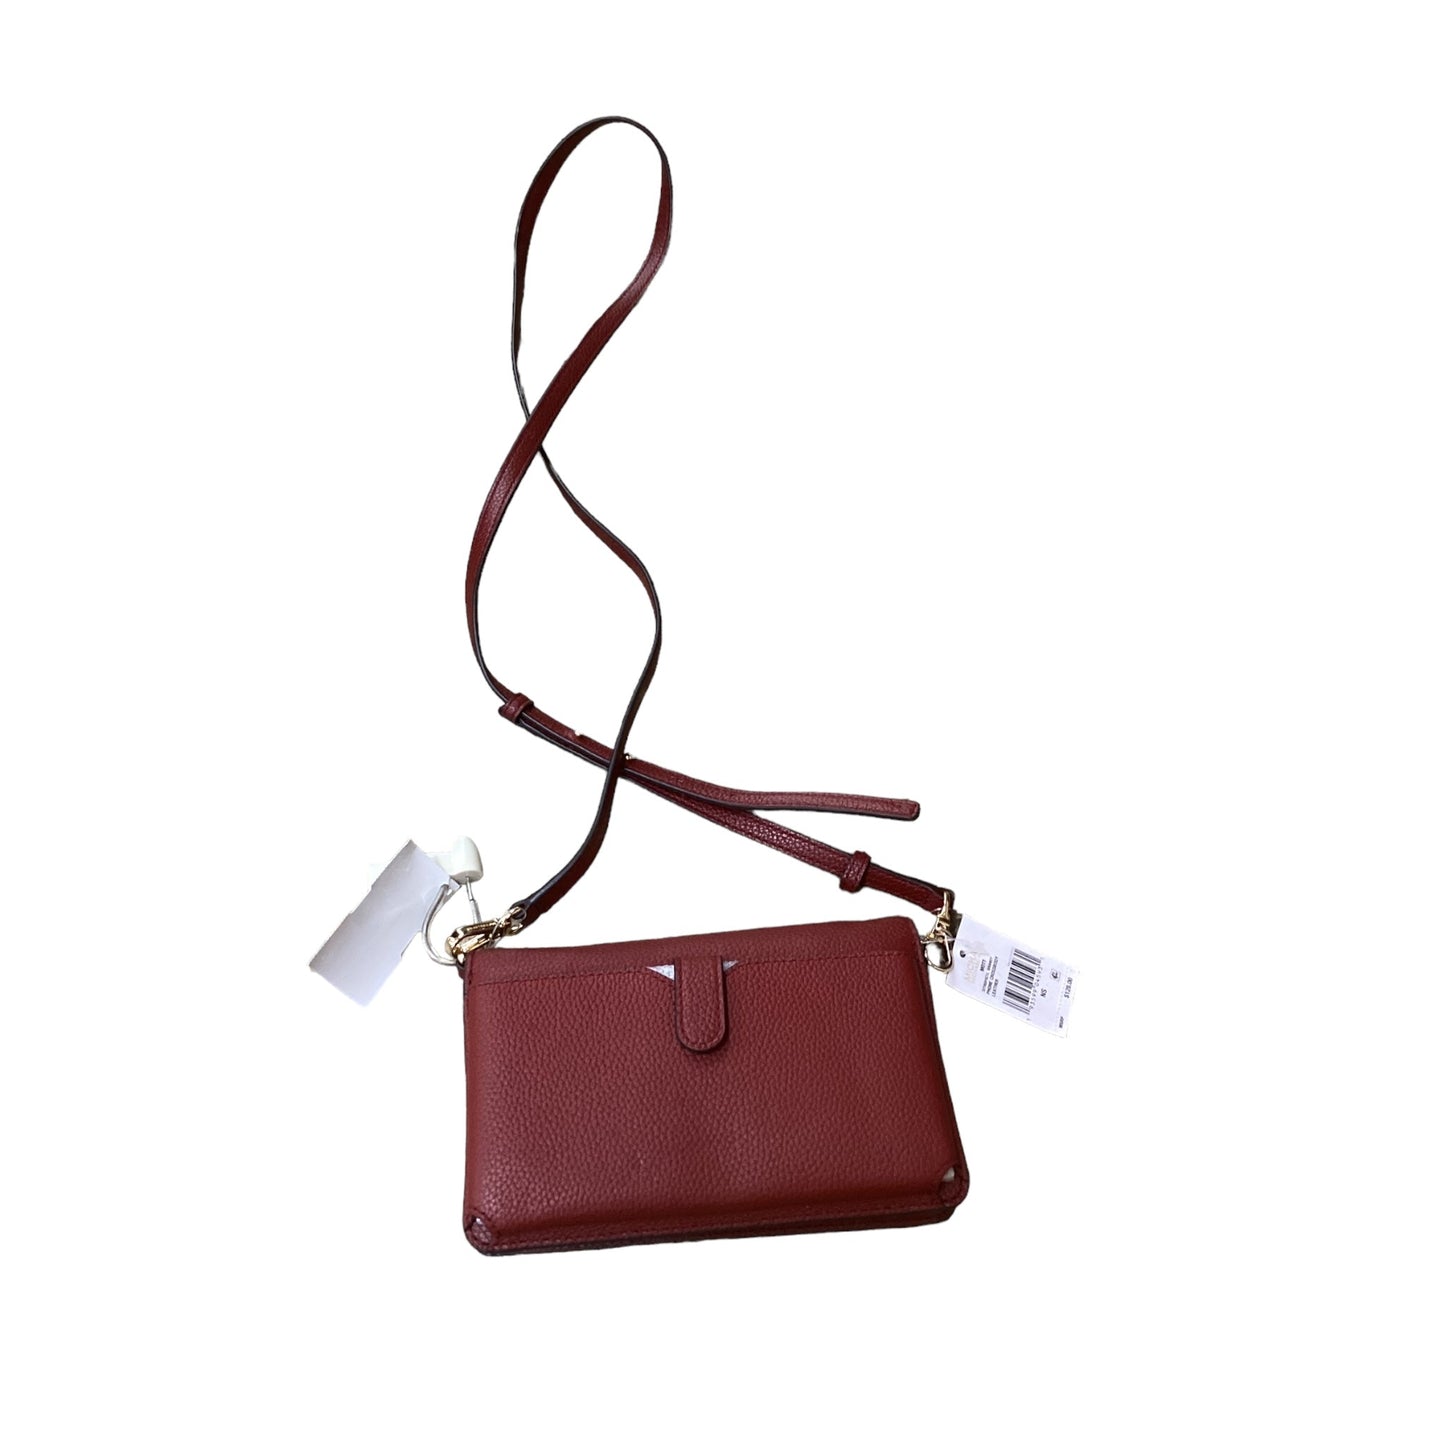 Handbag Leather Antonio Melani, Size Medium